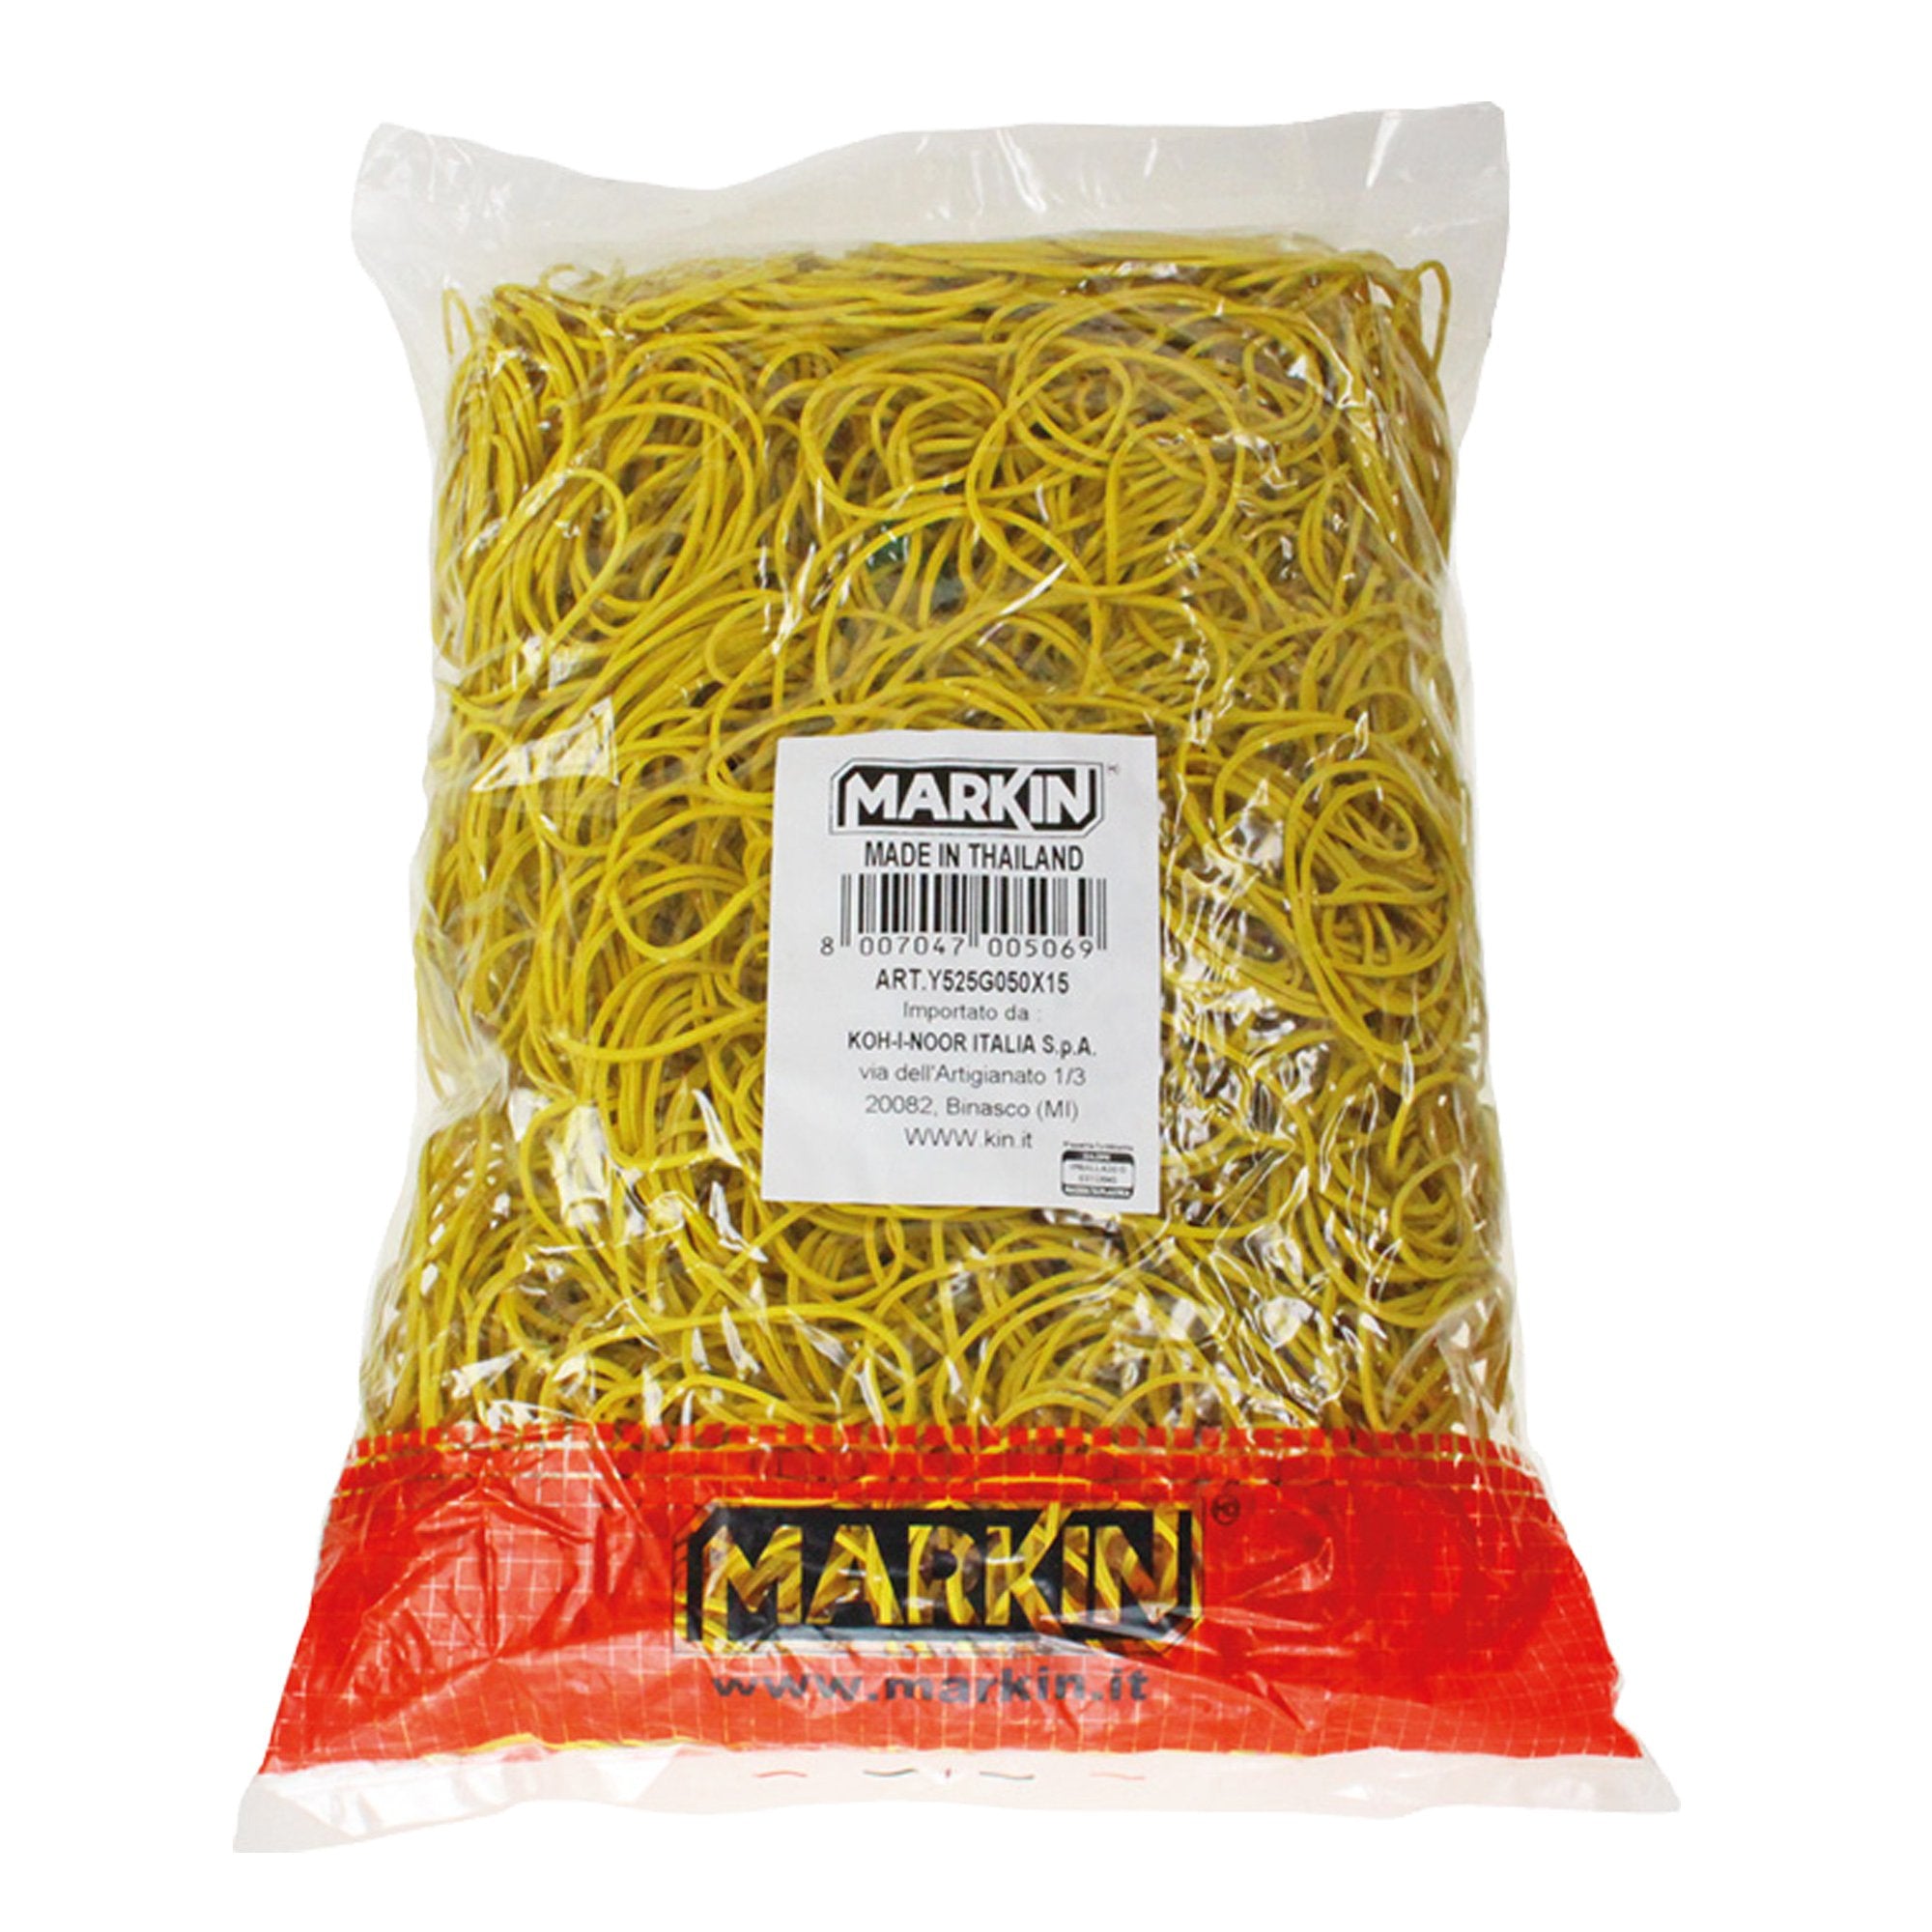 markin-elastico-gomma-giallo-d50-sacco-1kg